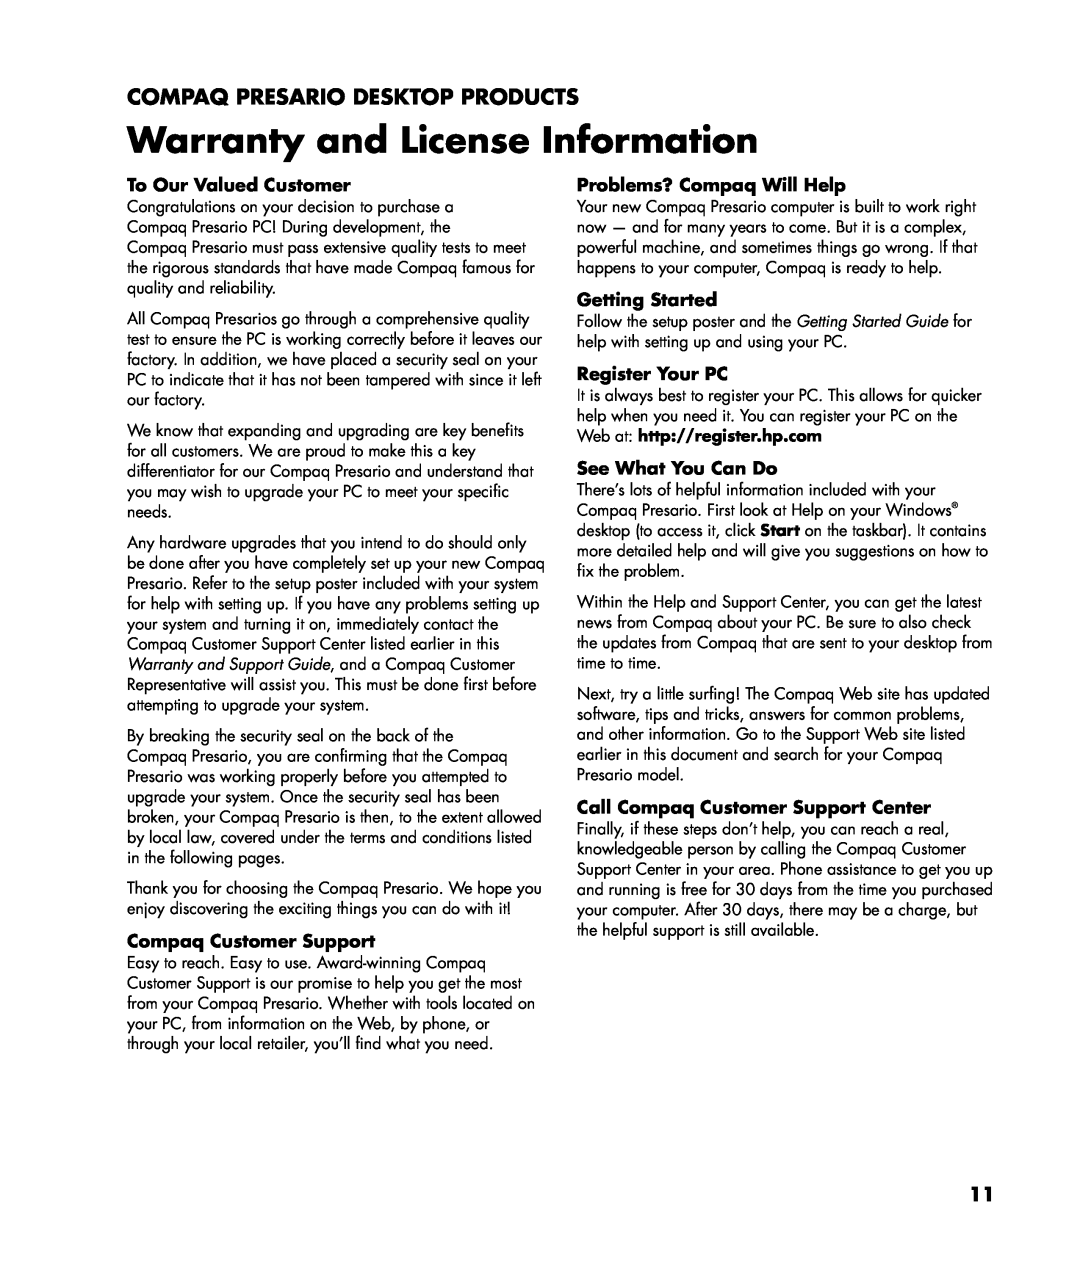 HP SR1300CF (PJ745AV) manual Warranty and License Information, Compaq Presario Desktop Products, To Our Valued Customer 